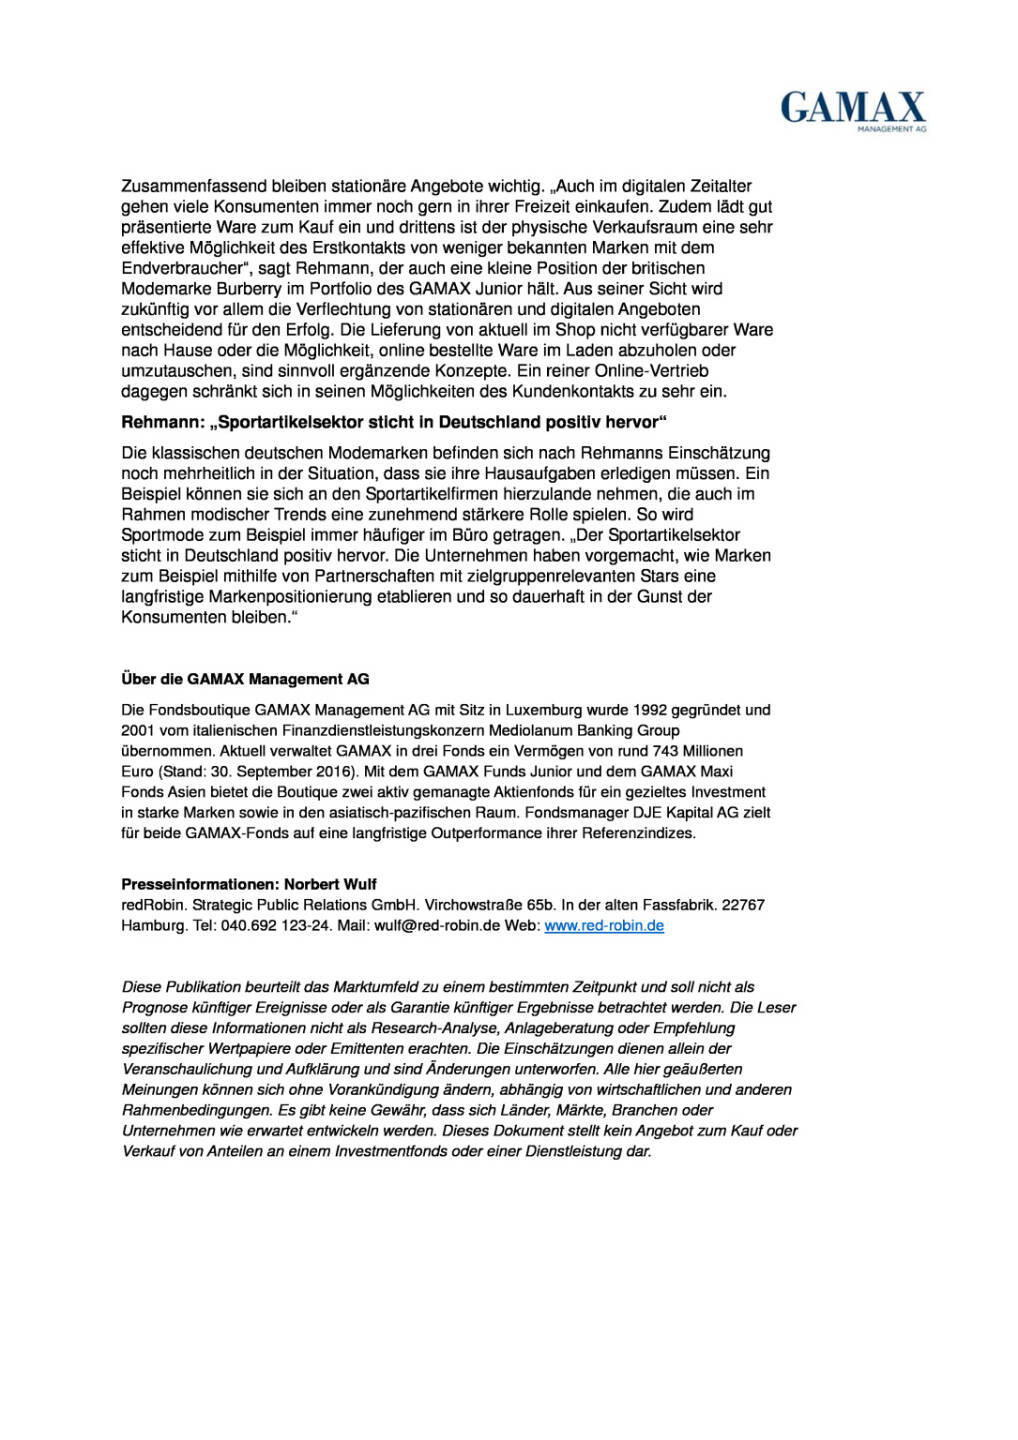 GAMAX-Markenexperte Moritz Rehmann: Textilbranche, Seite 2/2, komplettes Dokument unter http://boerse-social.com/static/uploads/file_1927_gamax-markenexperte_moritz_rehmann_textilbranche.pdf